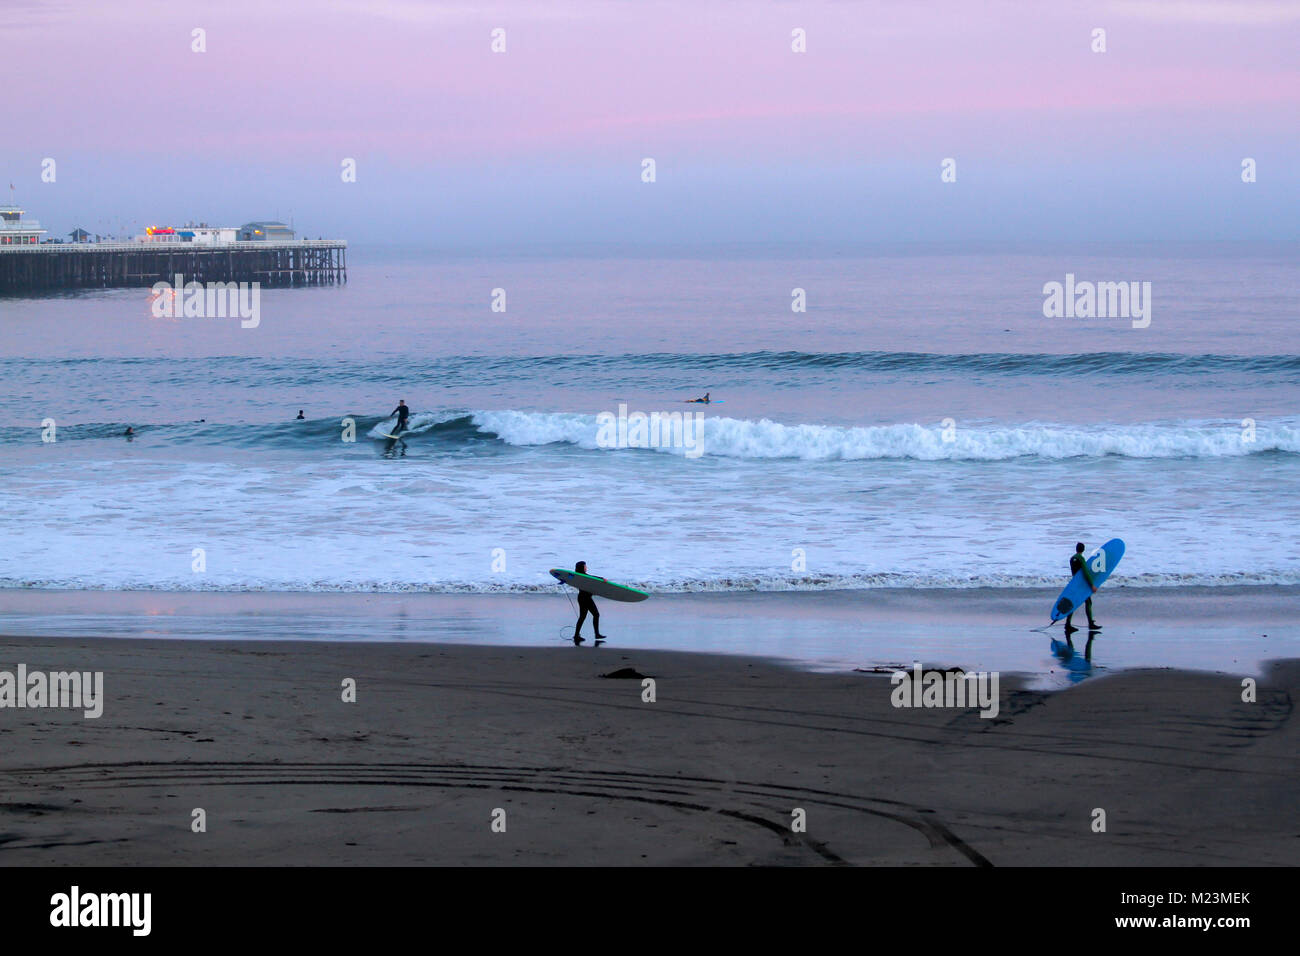 Surfers on Cowell's Beach at sunset, Santa Cruz, California, United States Stock Photo